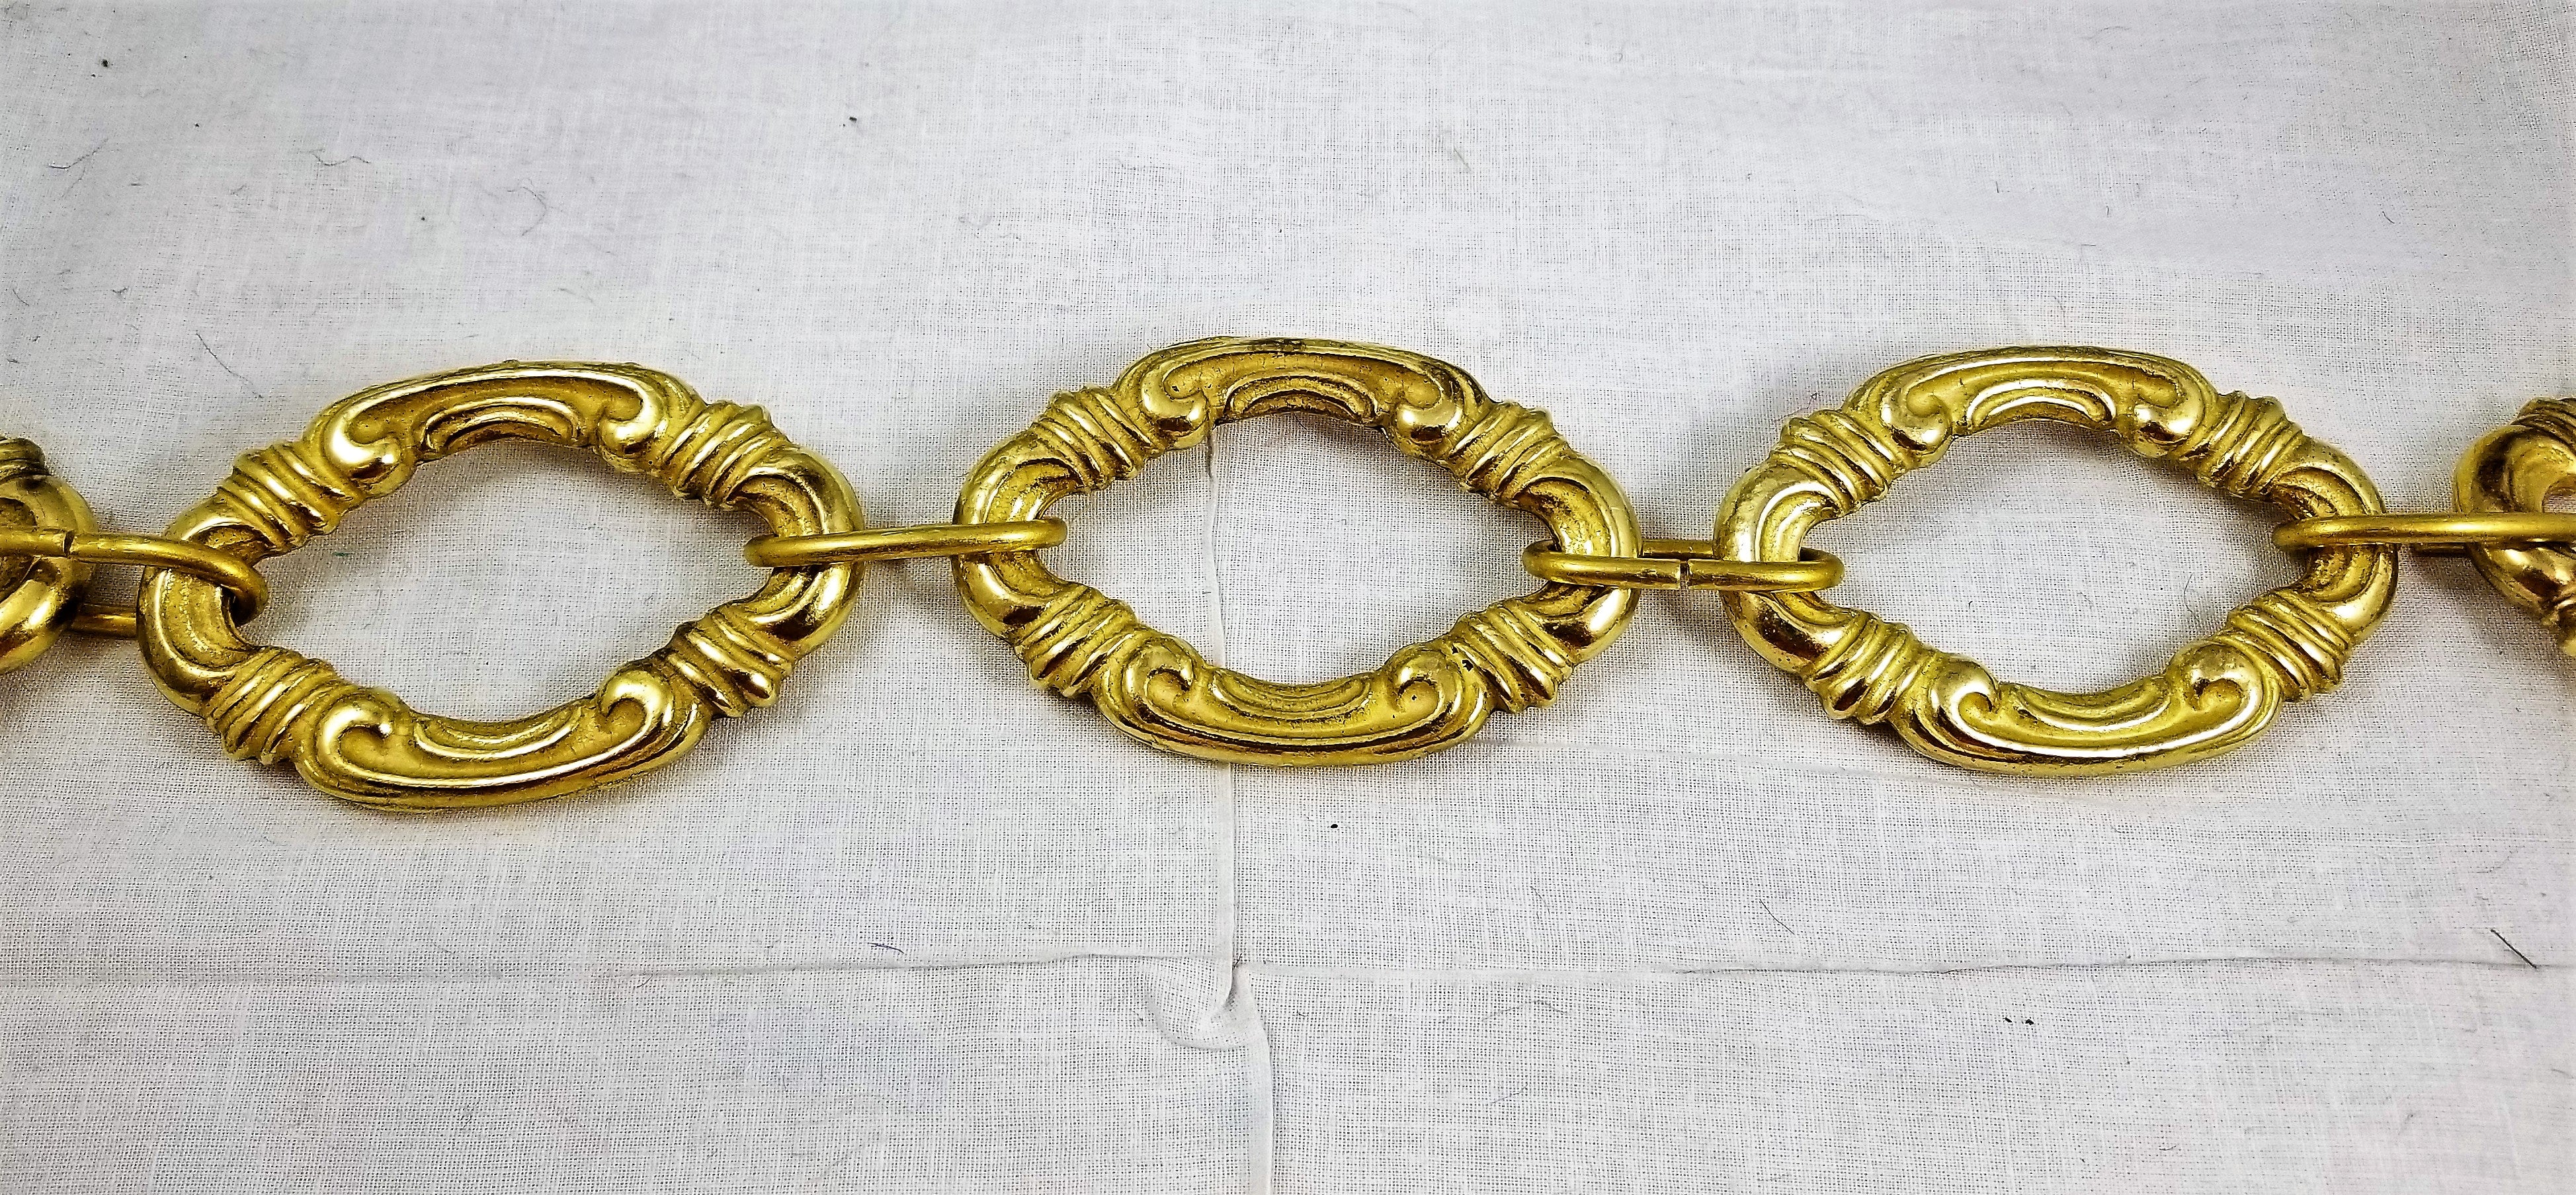 Solid Brass Decorative Design Chain Links.